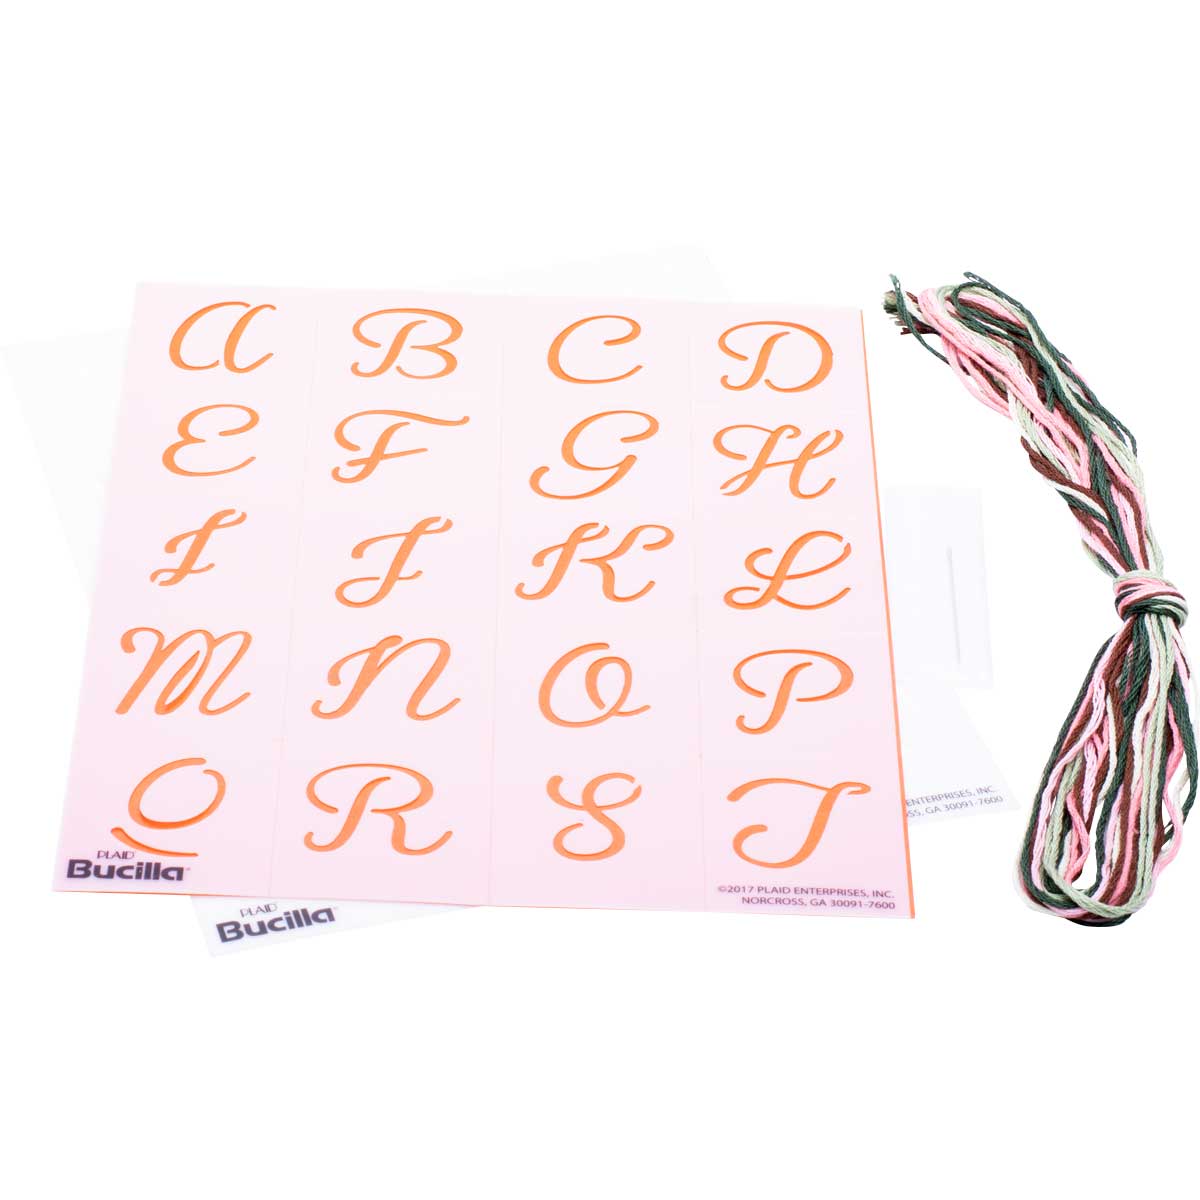 Bucilla ® Stamped Embroidery - Lettering & Monogramming Template - Script Font - 47809E